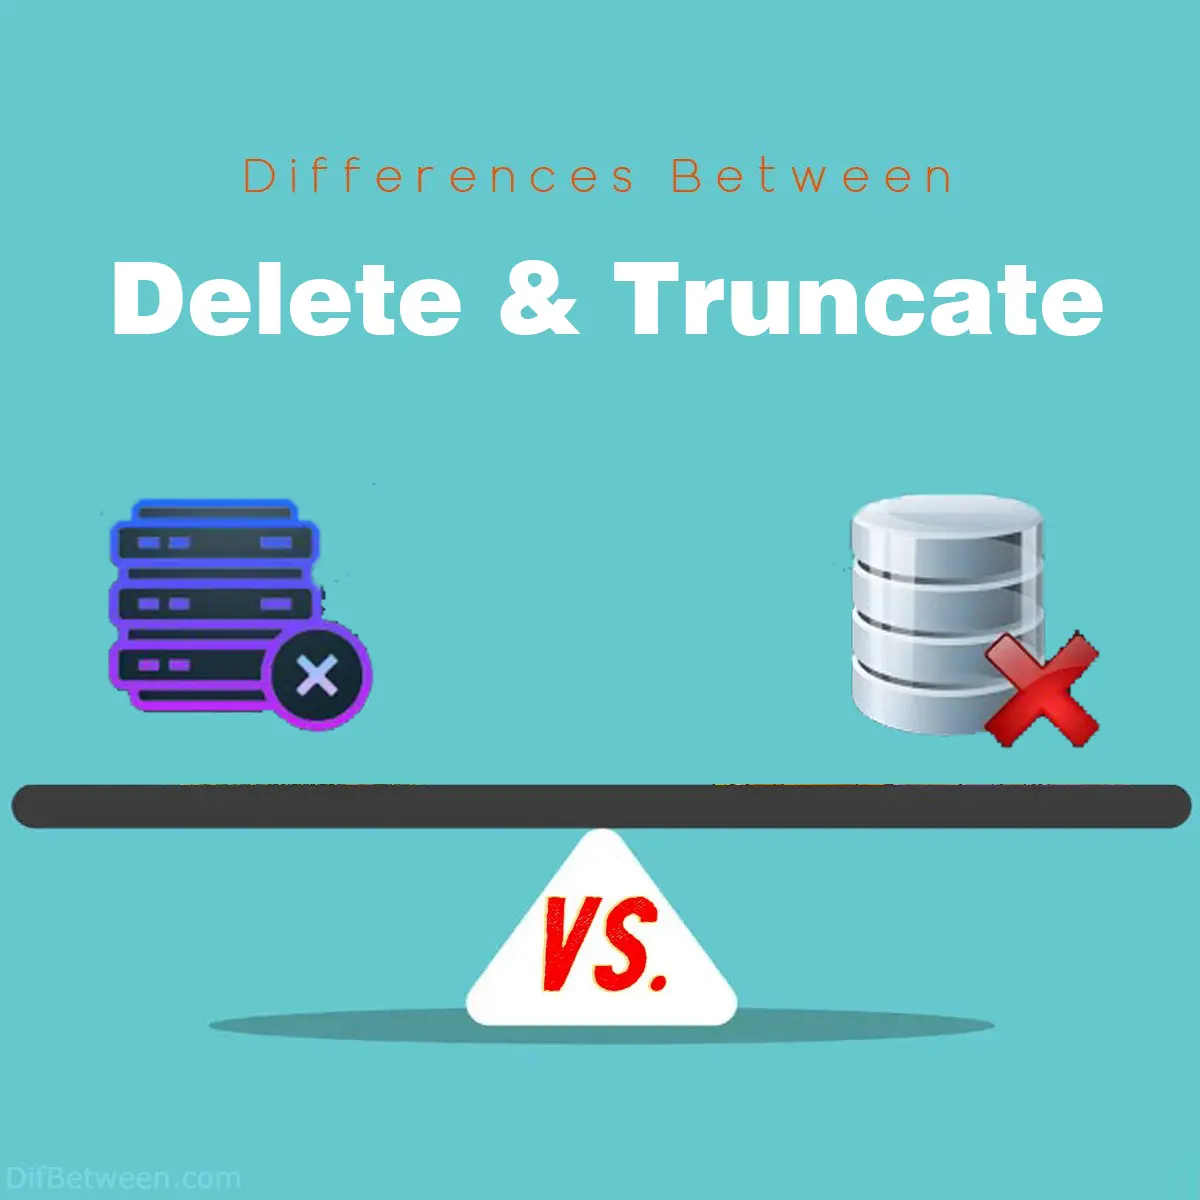 Differences Between Delete vs Truncate